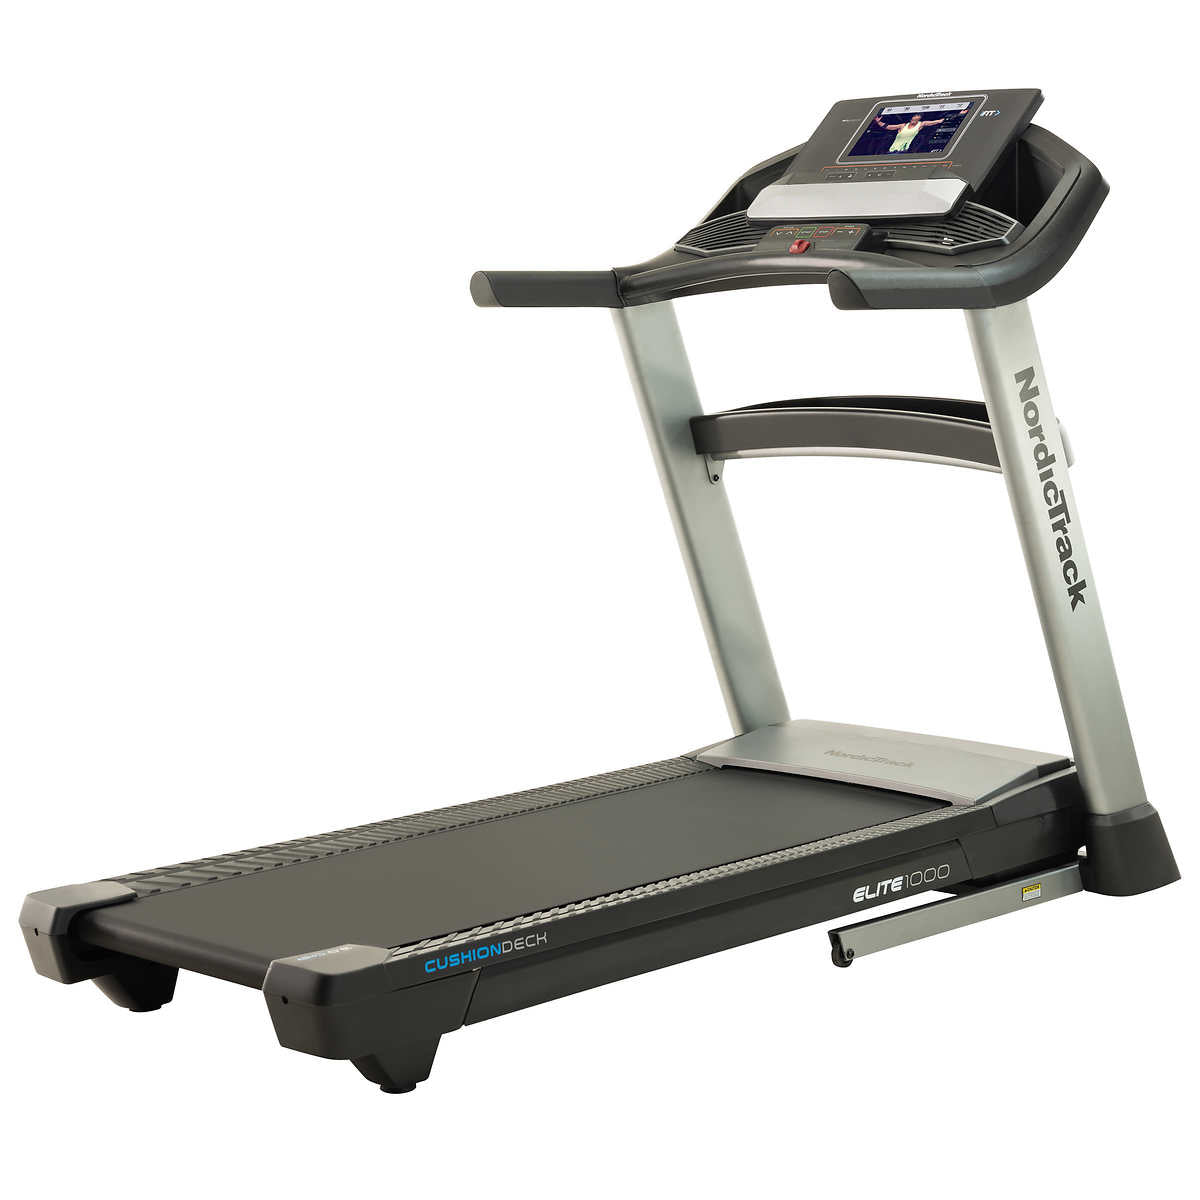 NordicTrack - Elite 1000 Treadmill